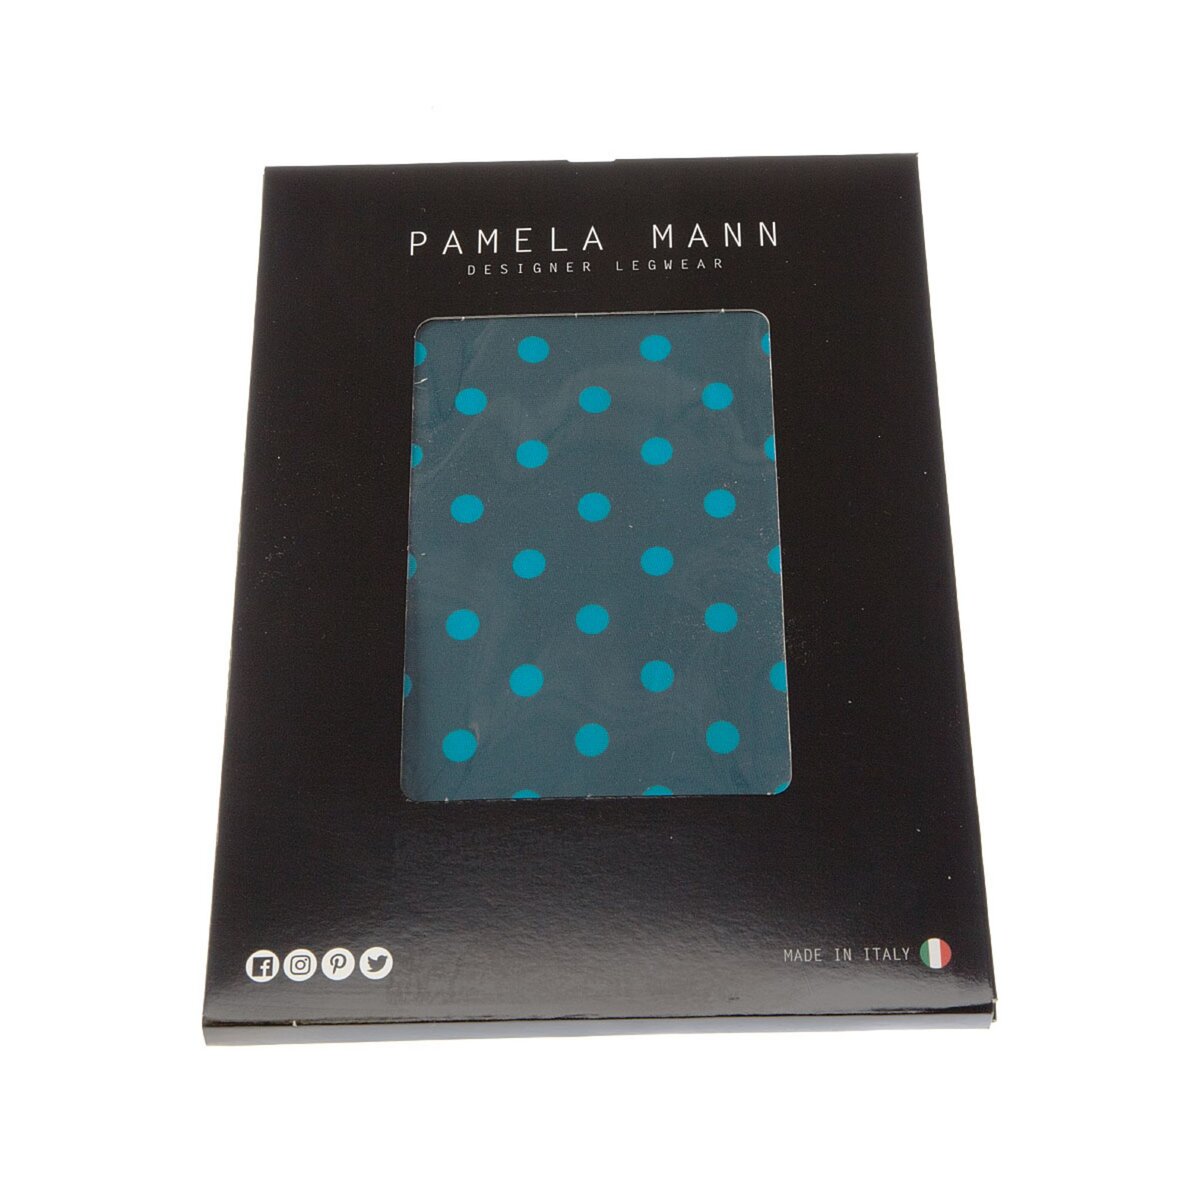 Pamela Mann Collant chaud - 1 paire - Fantaisie - Semi opaque - Mat - Gousset polyamide - Nylon - A pois - Polka dot B printed